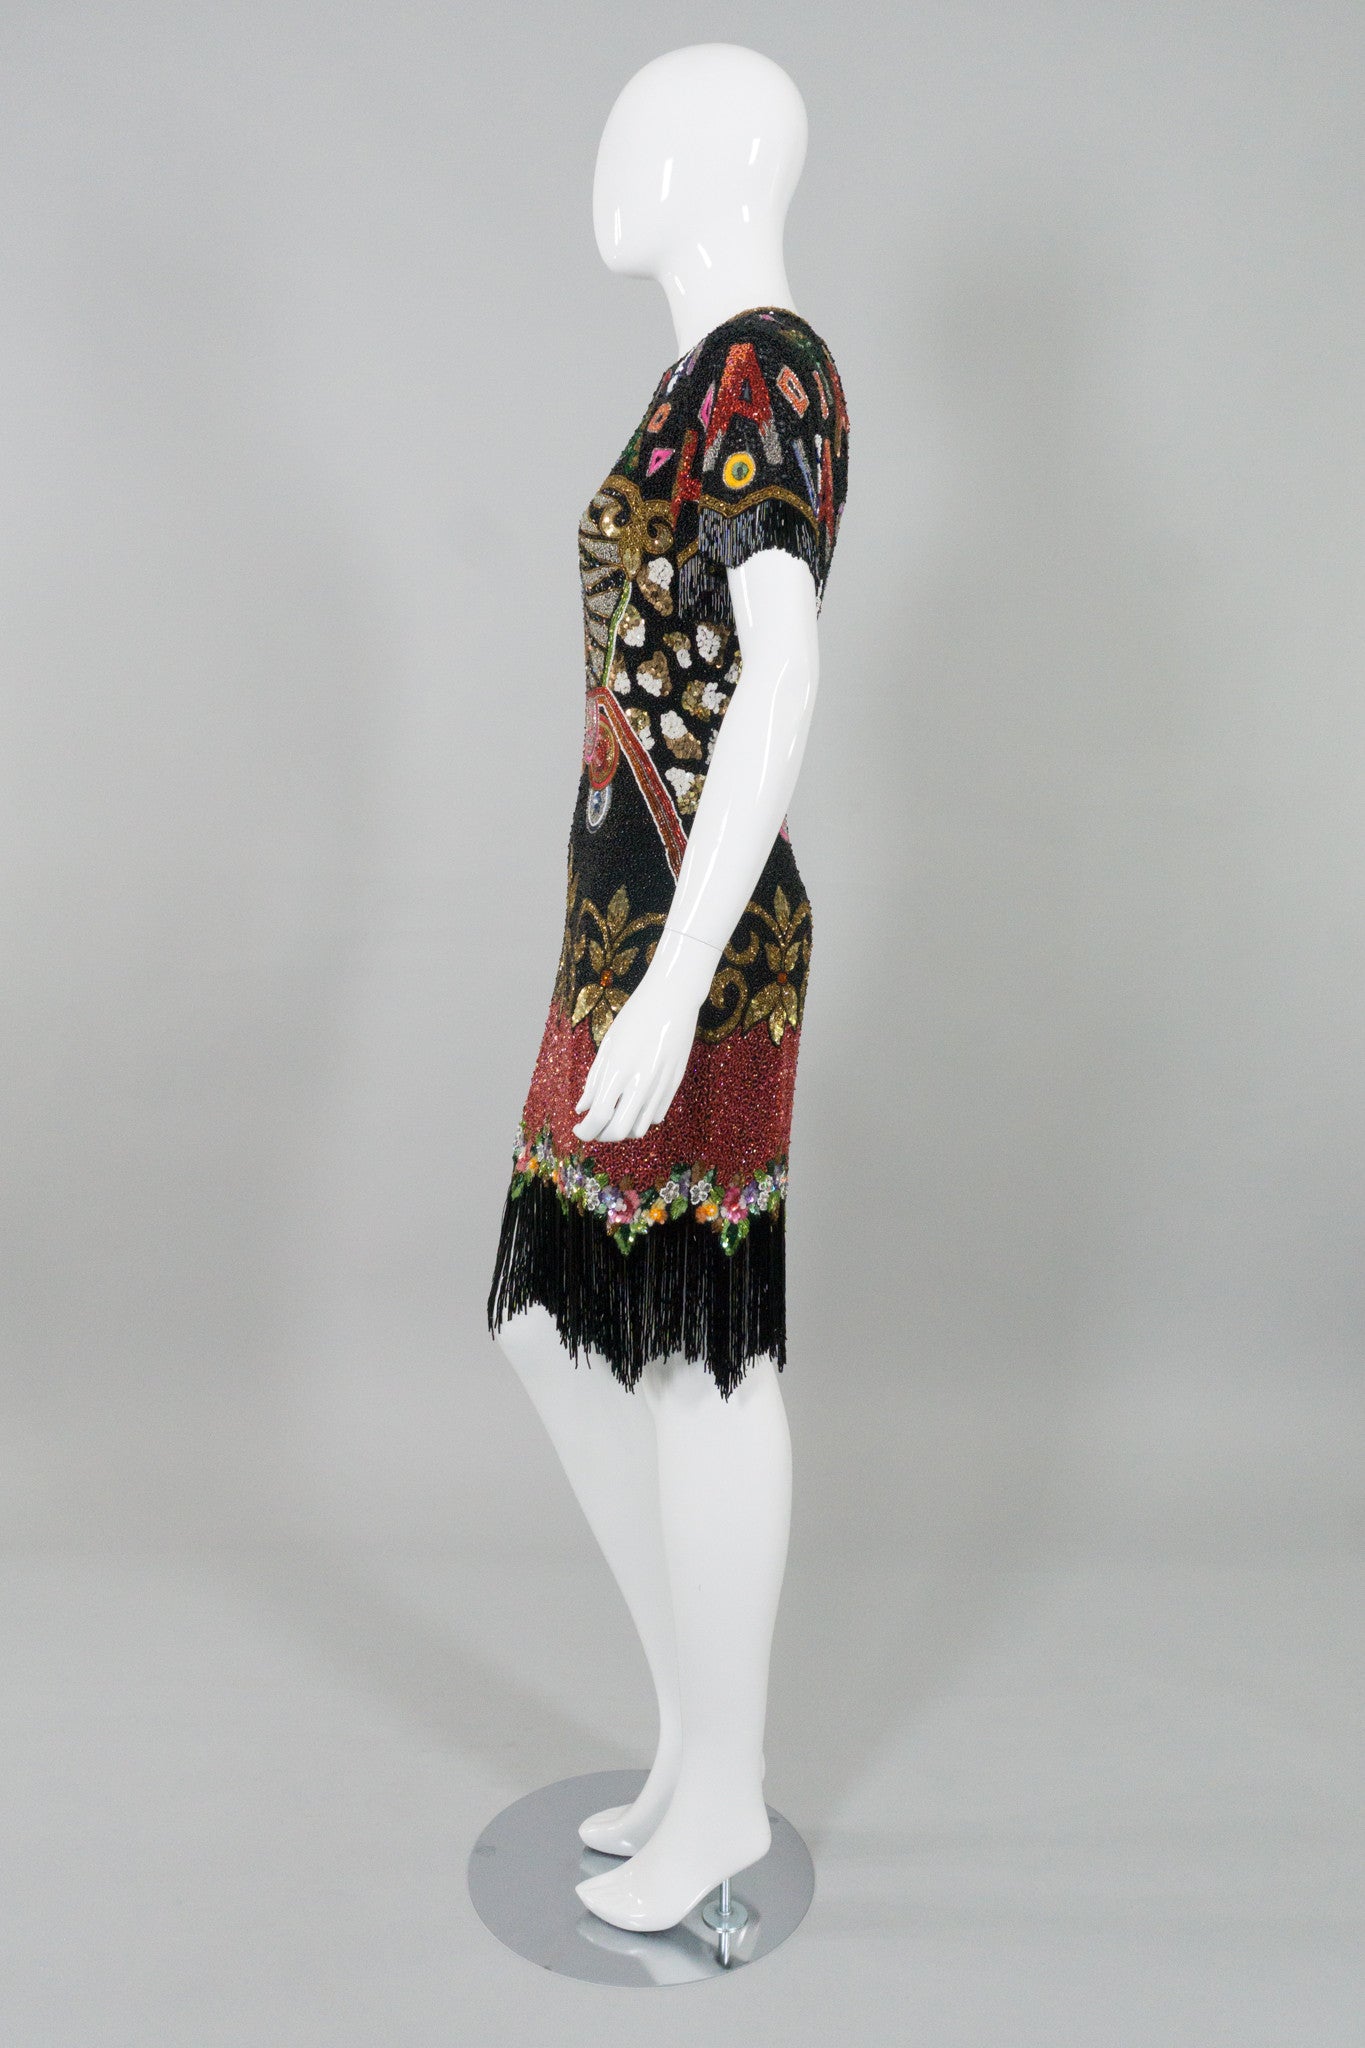 Naeeh Khan Riazee Vintage Beaded Alphabet Fringe Cocktail Dress